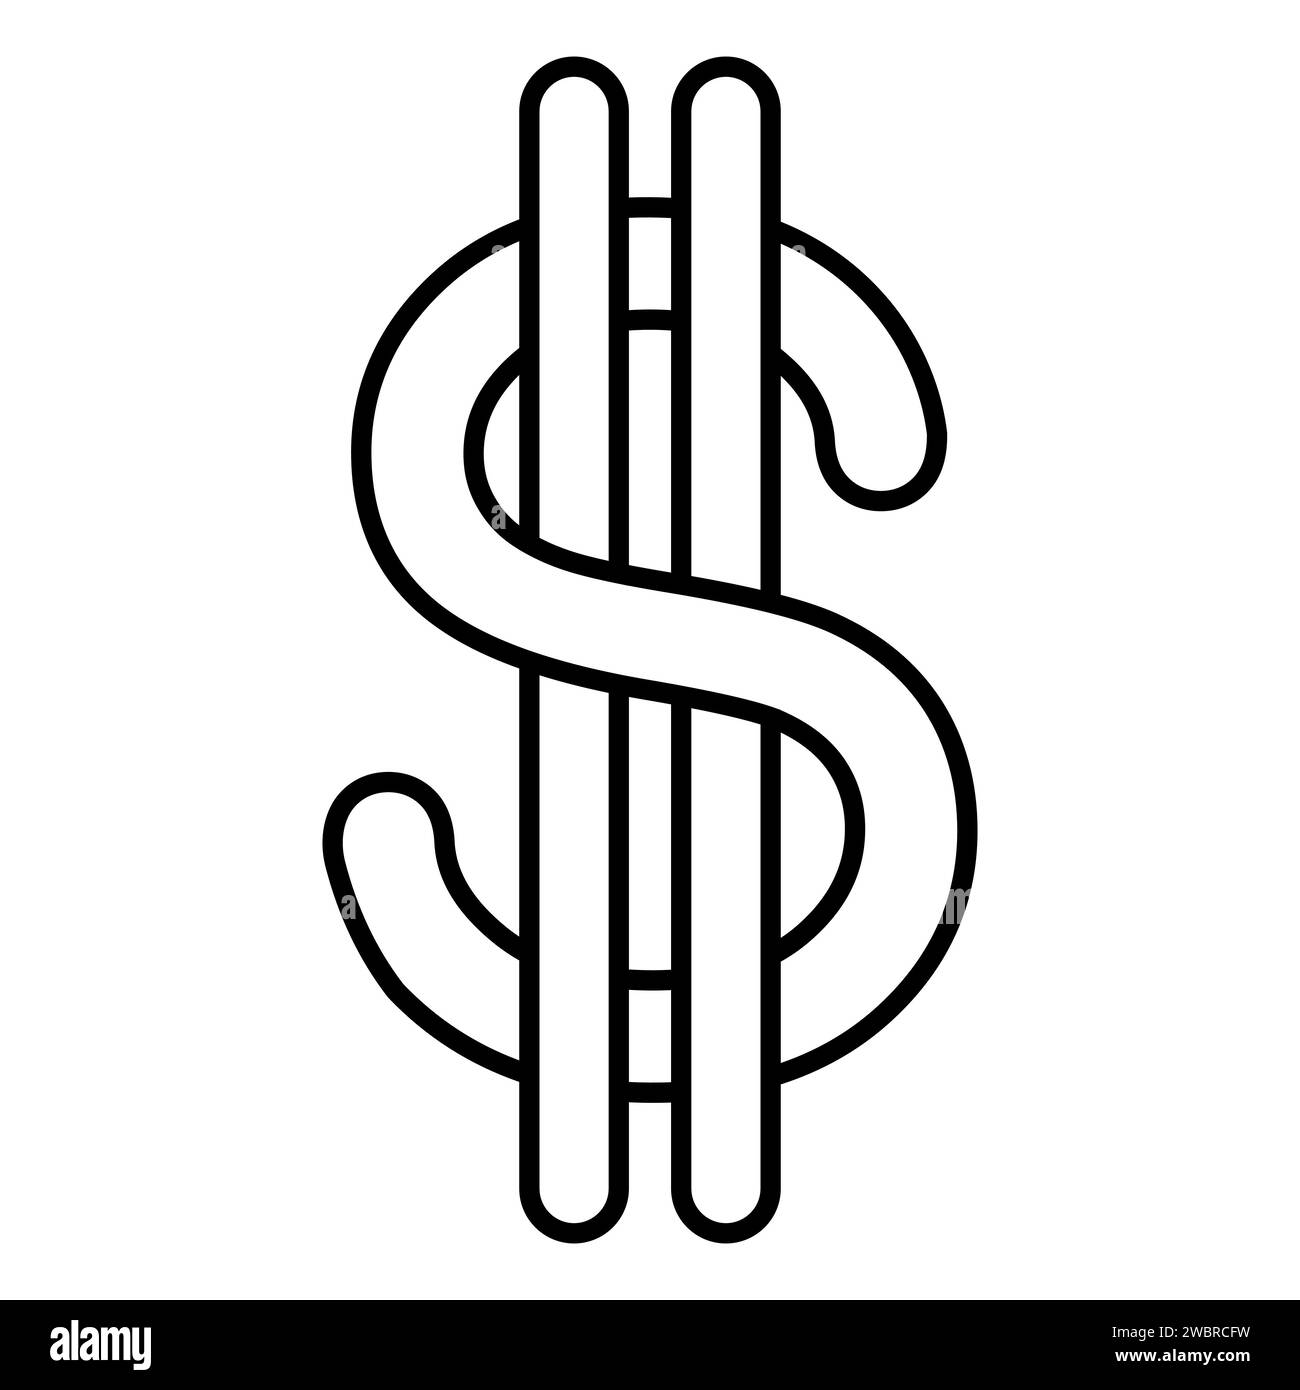 Dollar symbol, letter s two vertical lines, cartoon dollar symbol Stock Vector